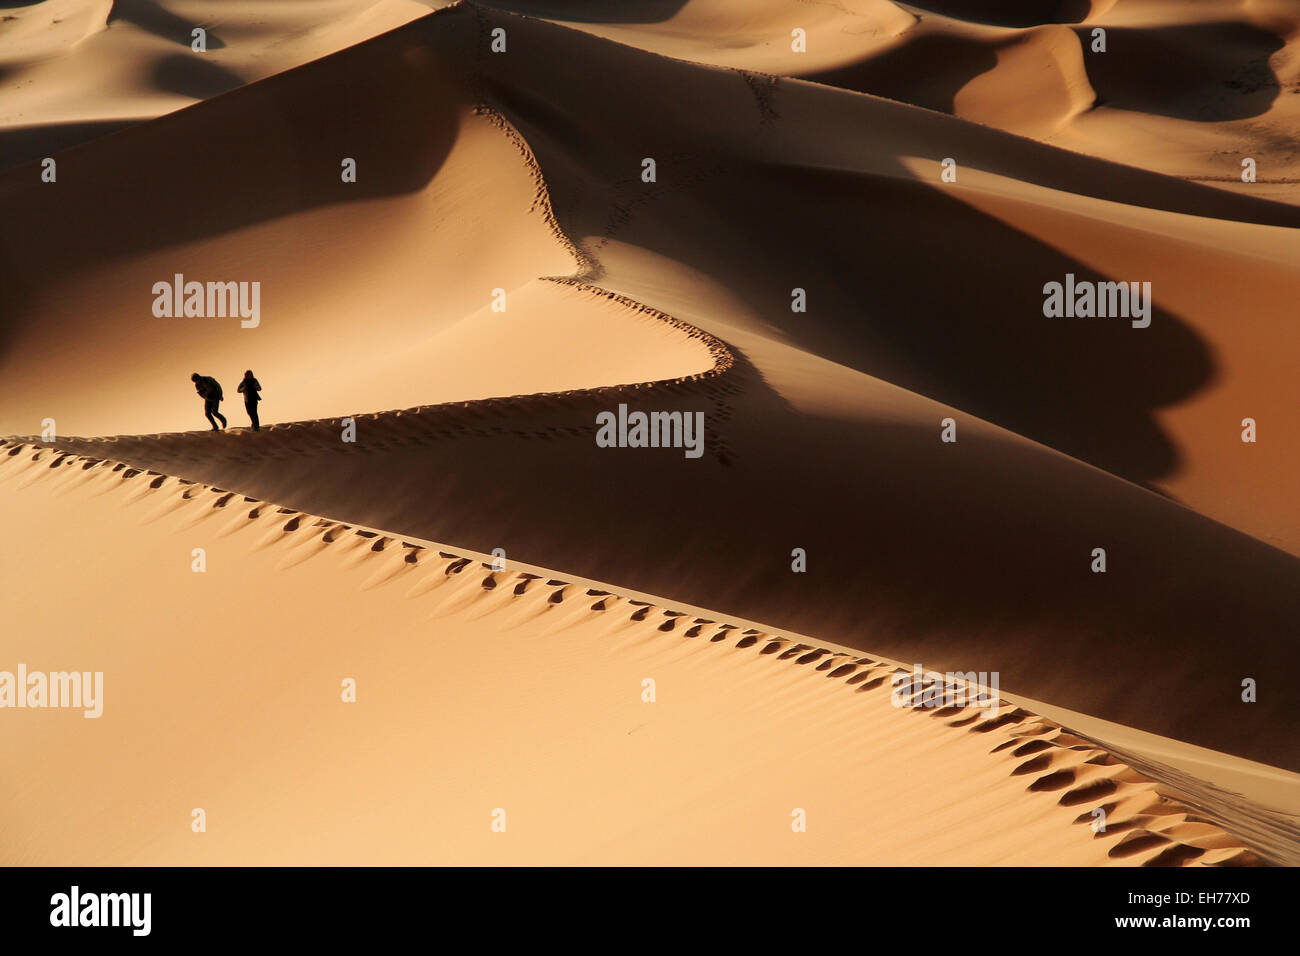 Wüste Sahara Stockfoto